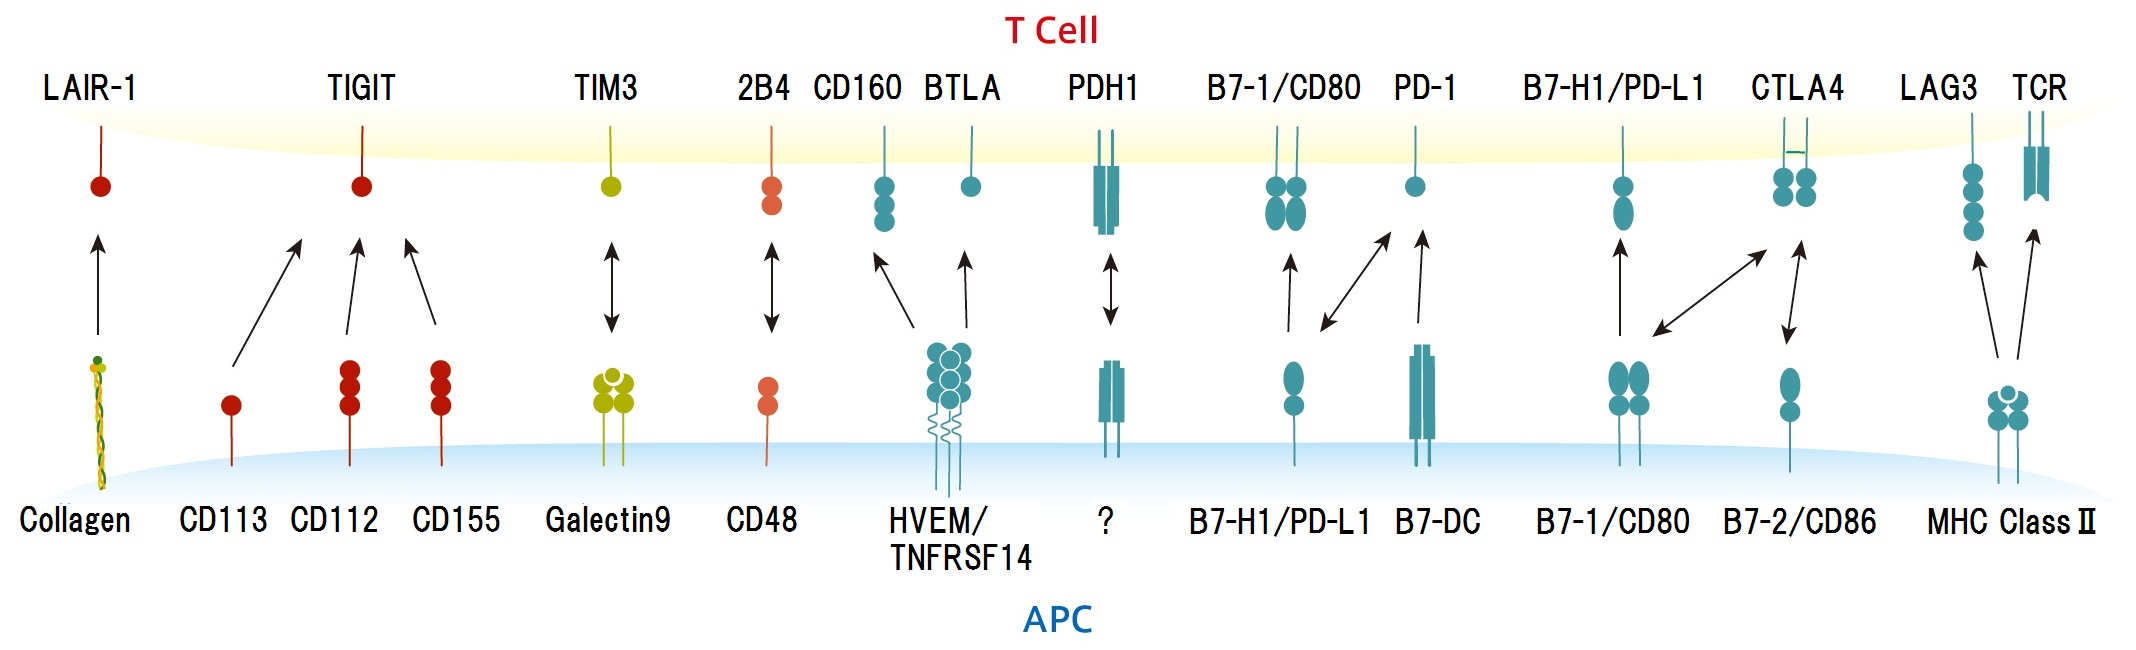 Immunoglobulin Superfamily (IgSF) Co-Inhibitory Signalのイメージ図